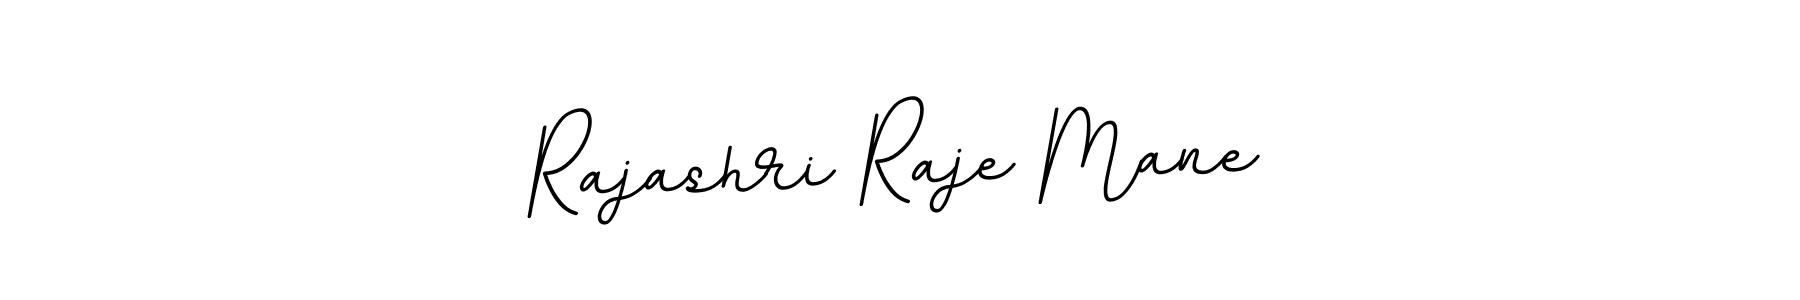 How to Draw Rajashri Raje Mane signature style? BallpointsItalic-DORy9 is a latest design signature styles for name Rajashri Raje Mane. Rajashri Raje Mane signature style 11 images and pictures png